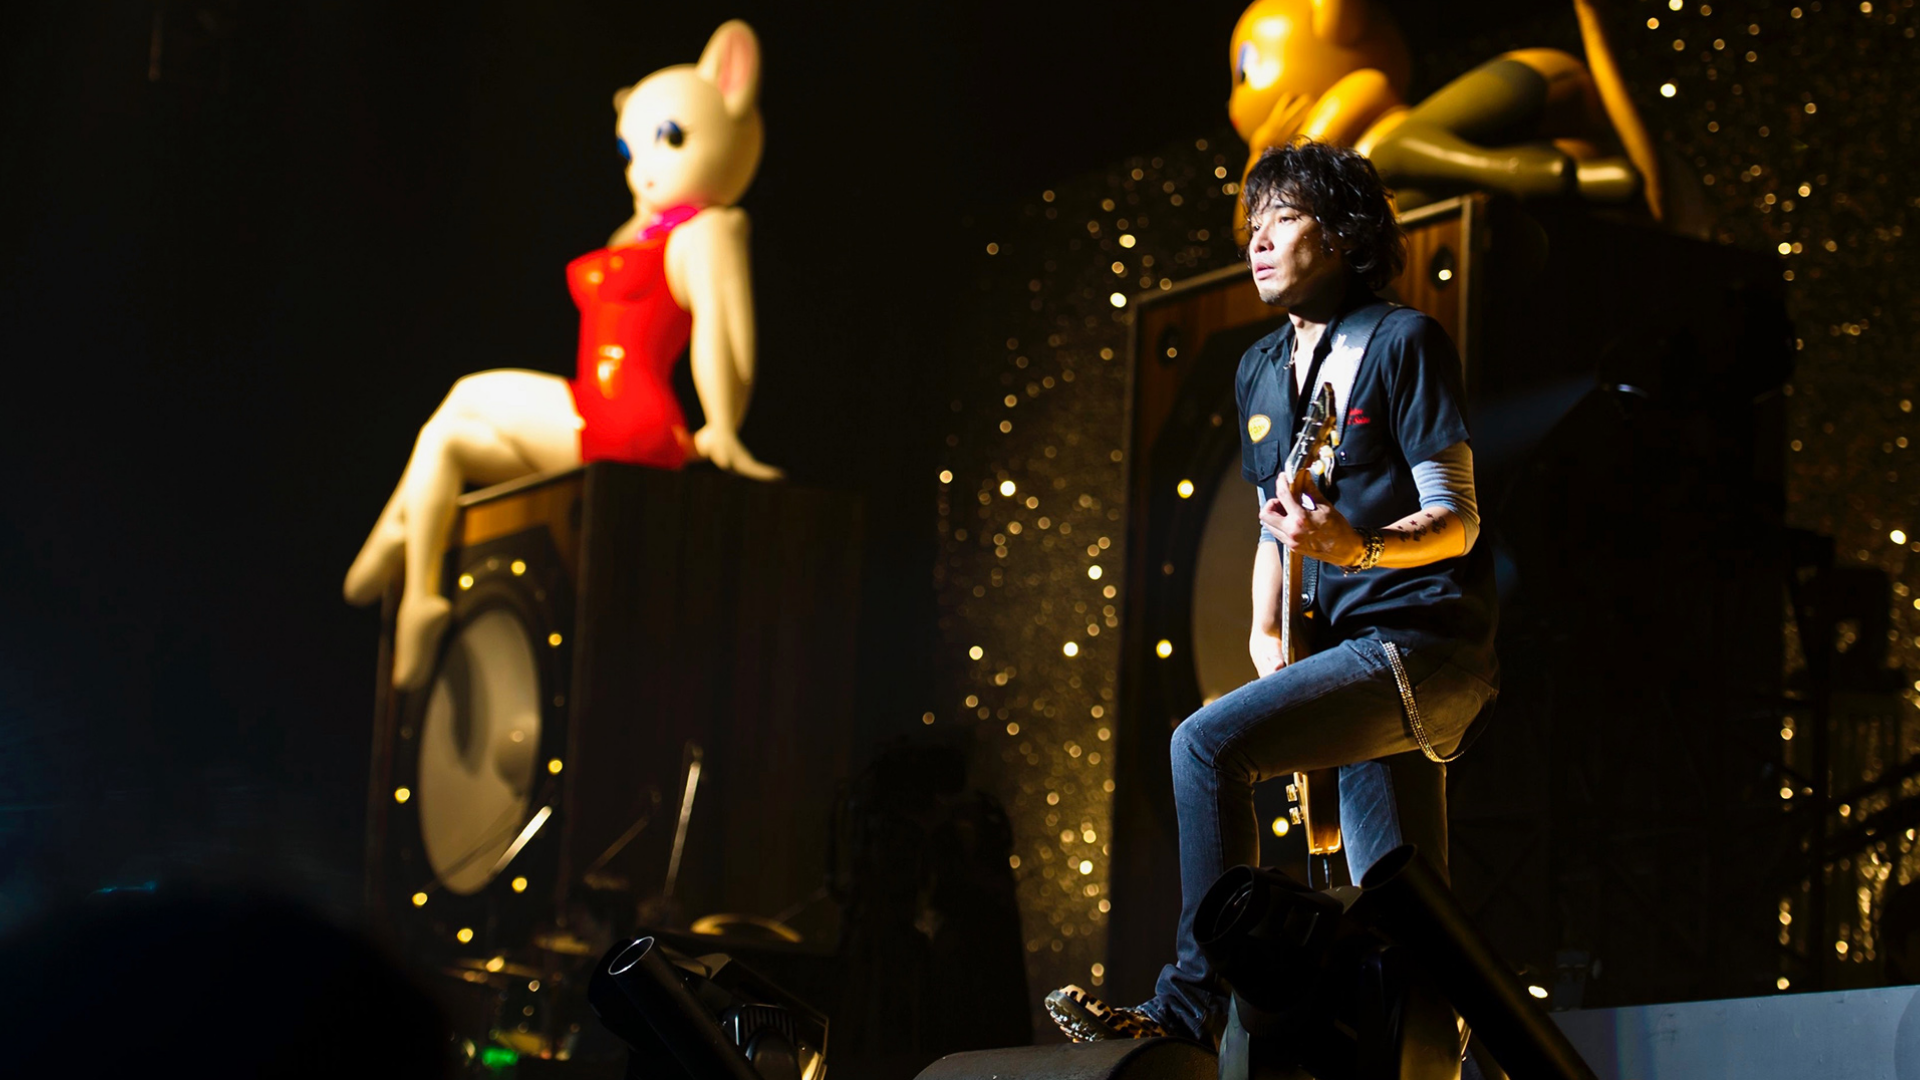 KAZUYOSHI SAITO LIVE TOUR 2011～2012 45 STONES at 日本武道館 2012.2.11(音楽・アイドル /  2012) - 動画配信 | U-NEXT 31日間無料トライアル